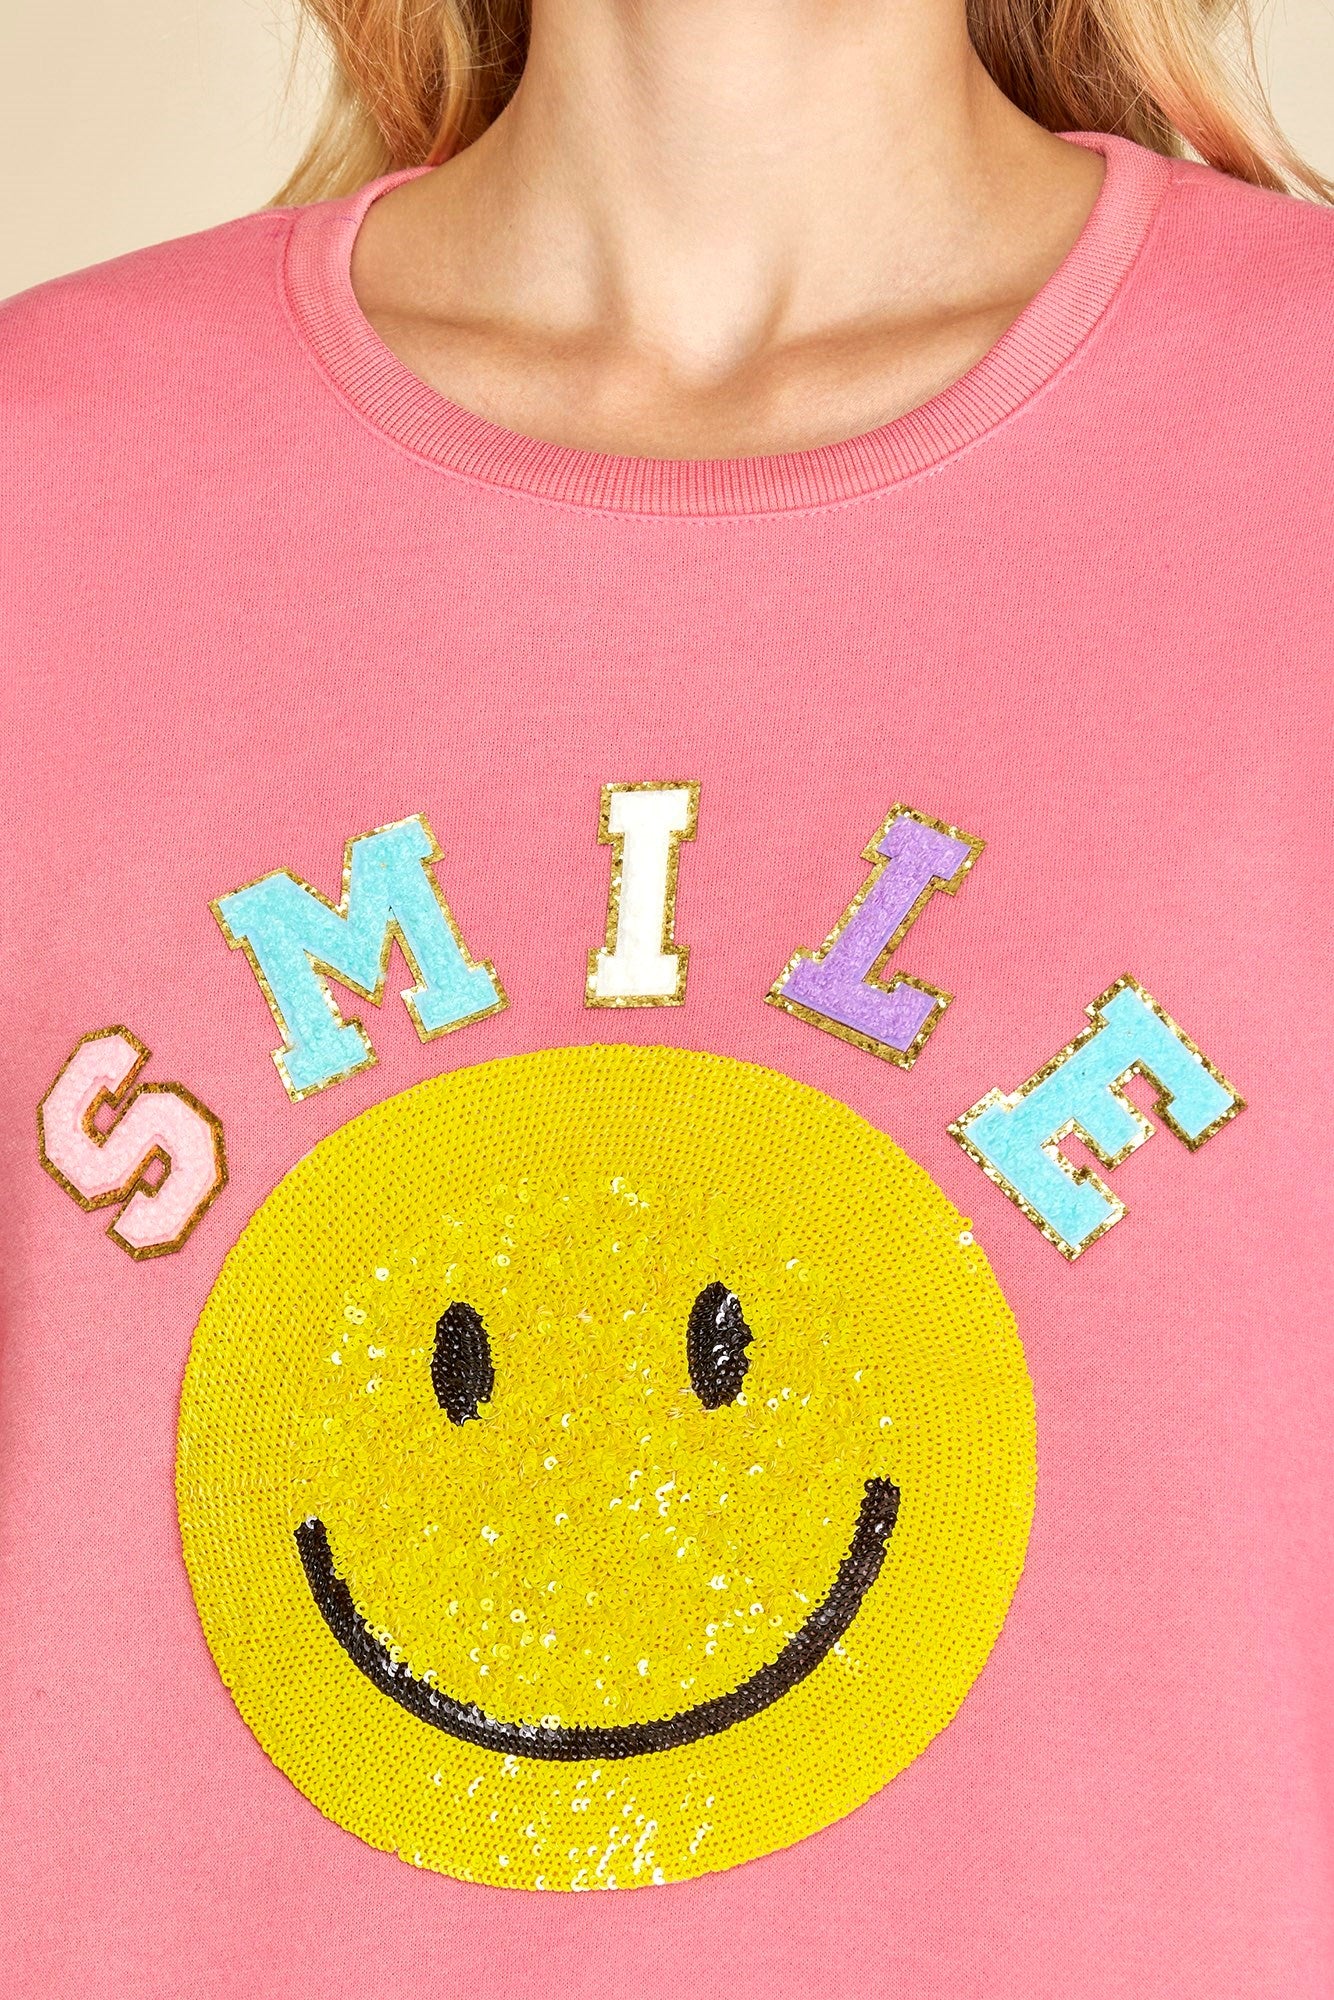 Happy Smile Patch Sweatshirt